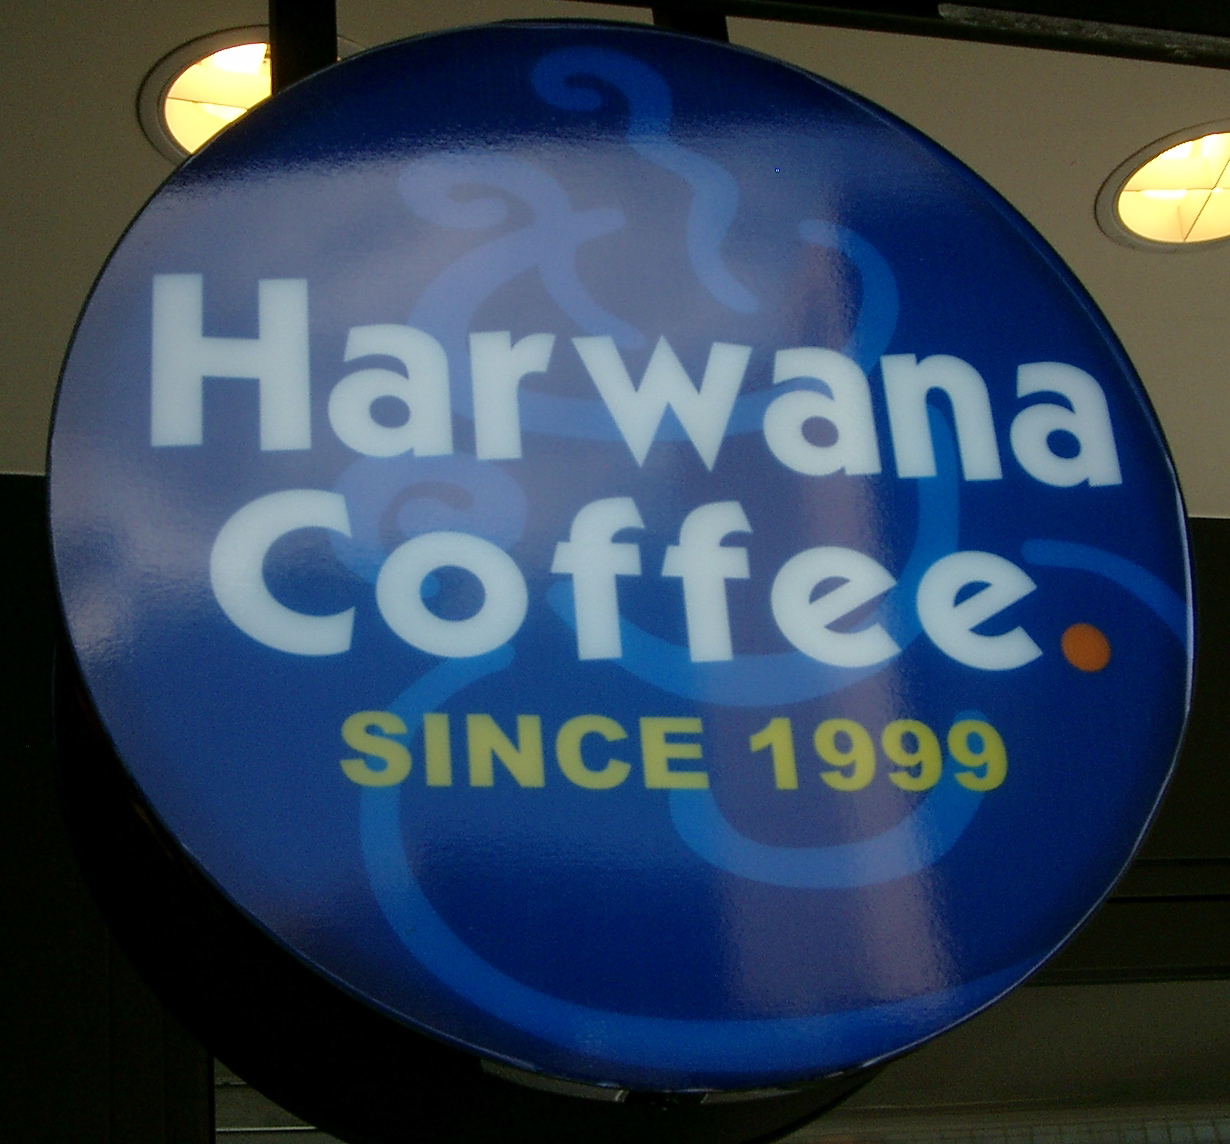 Harwana Coffee